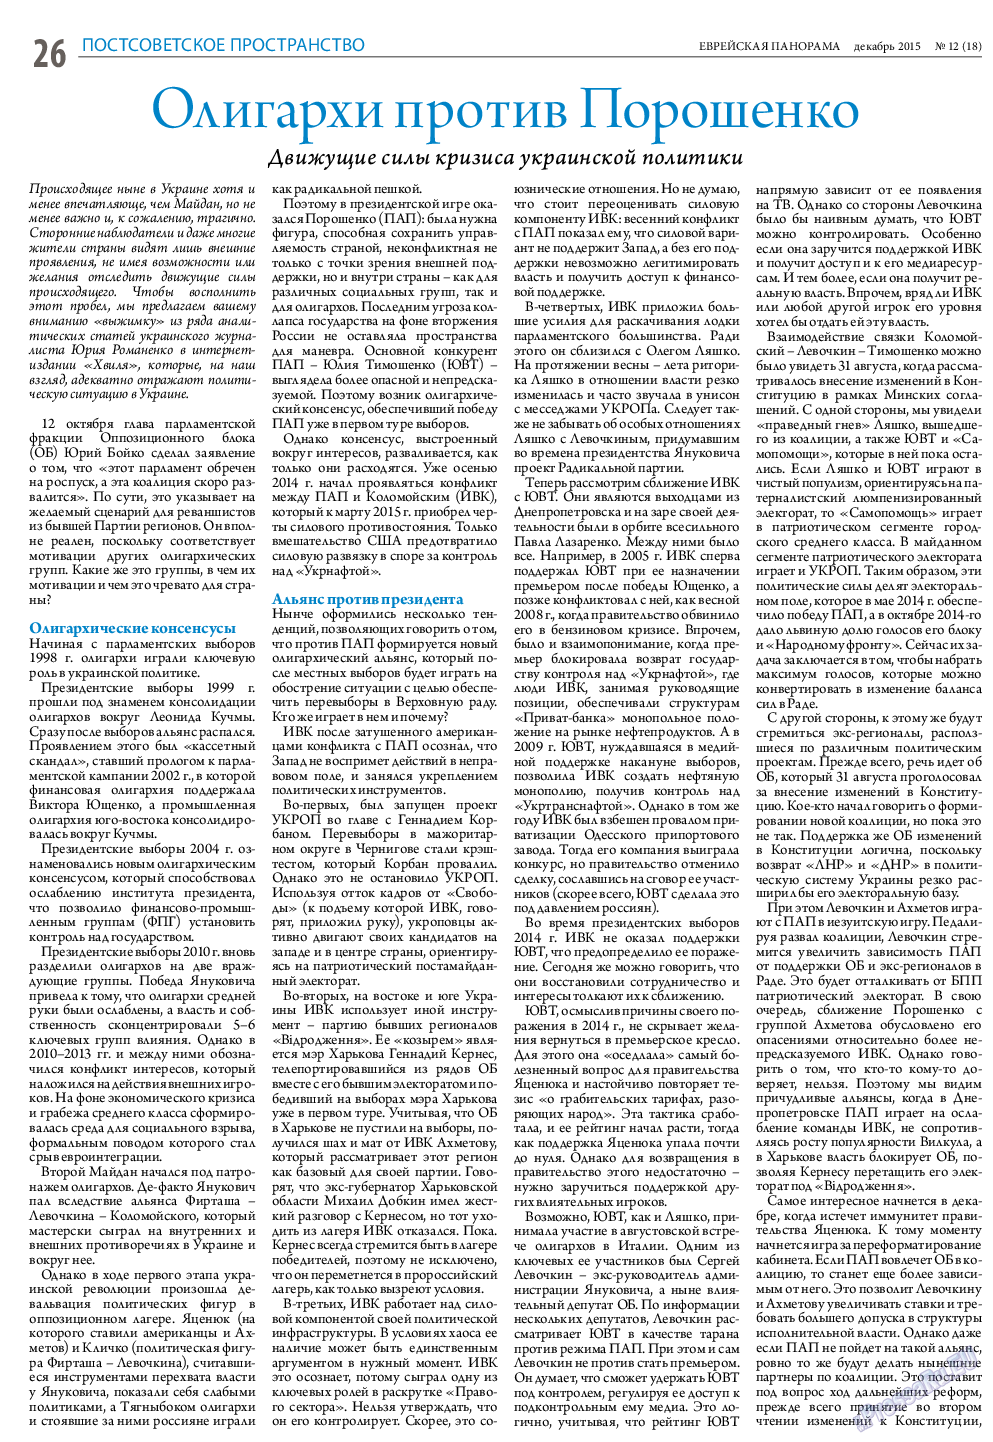 Еврейская панорама, газета. 2015 №12 стр.26